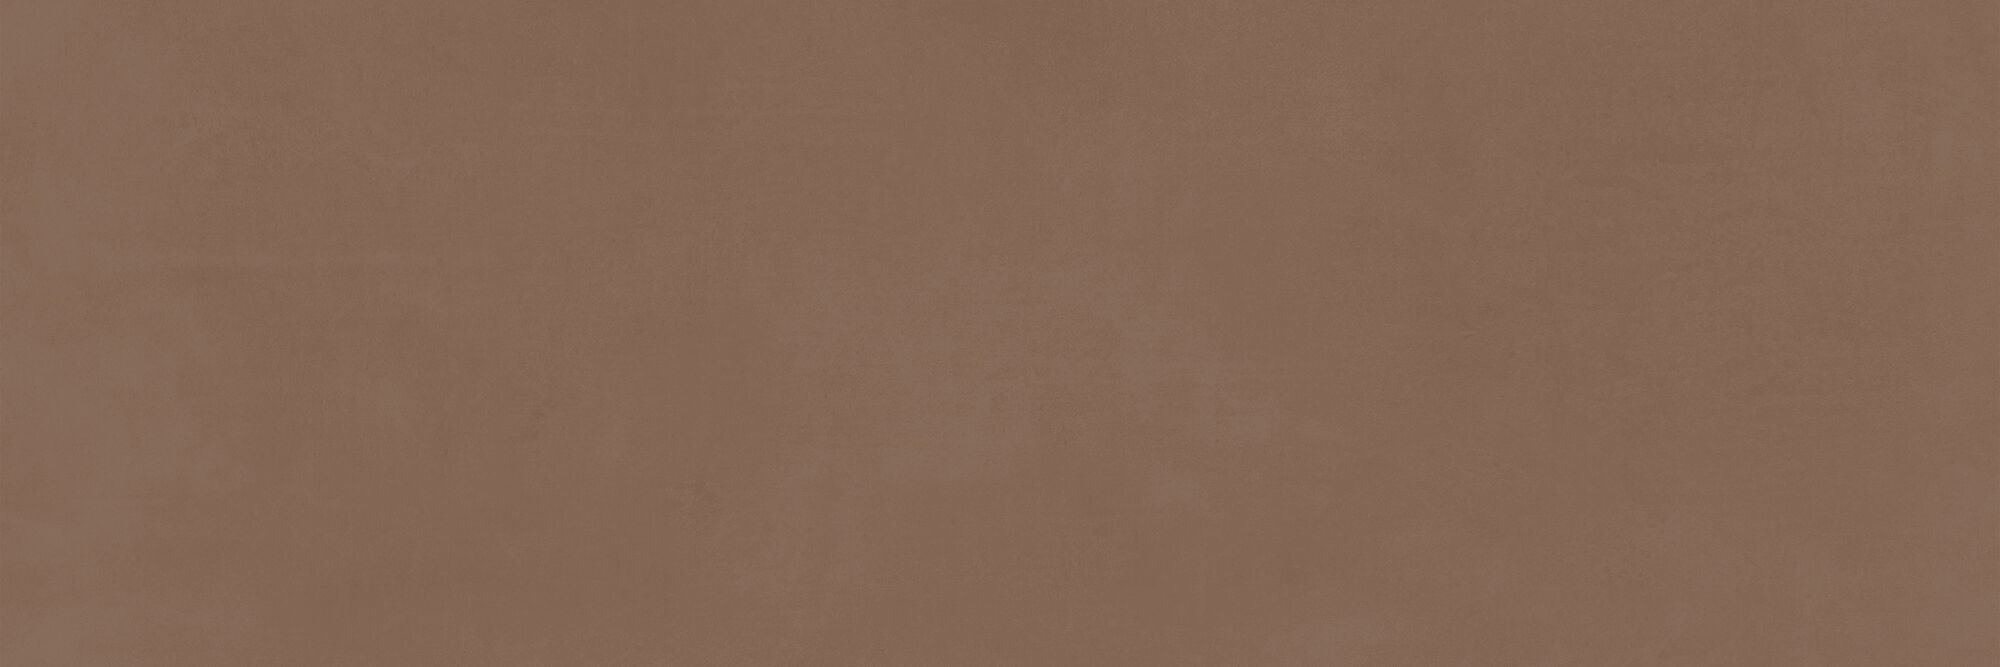 Плитка Meissen Keramik Fragmenti коричневый 25x75 A16500 2